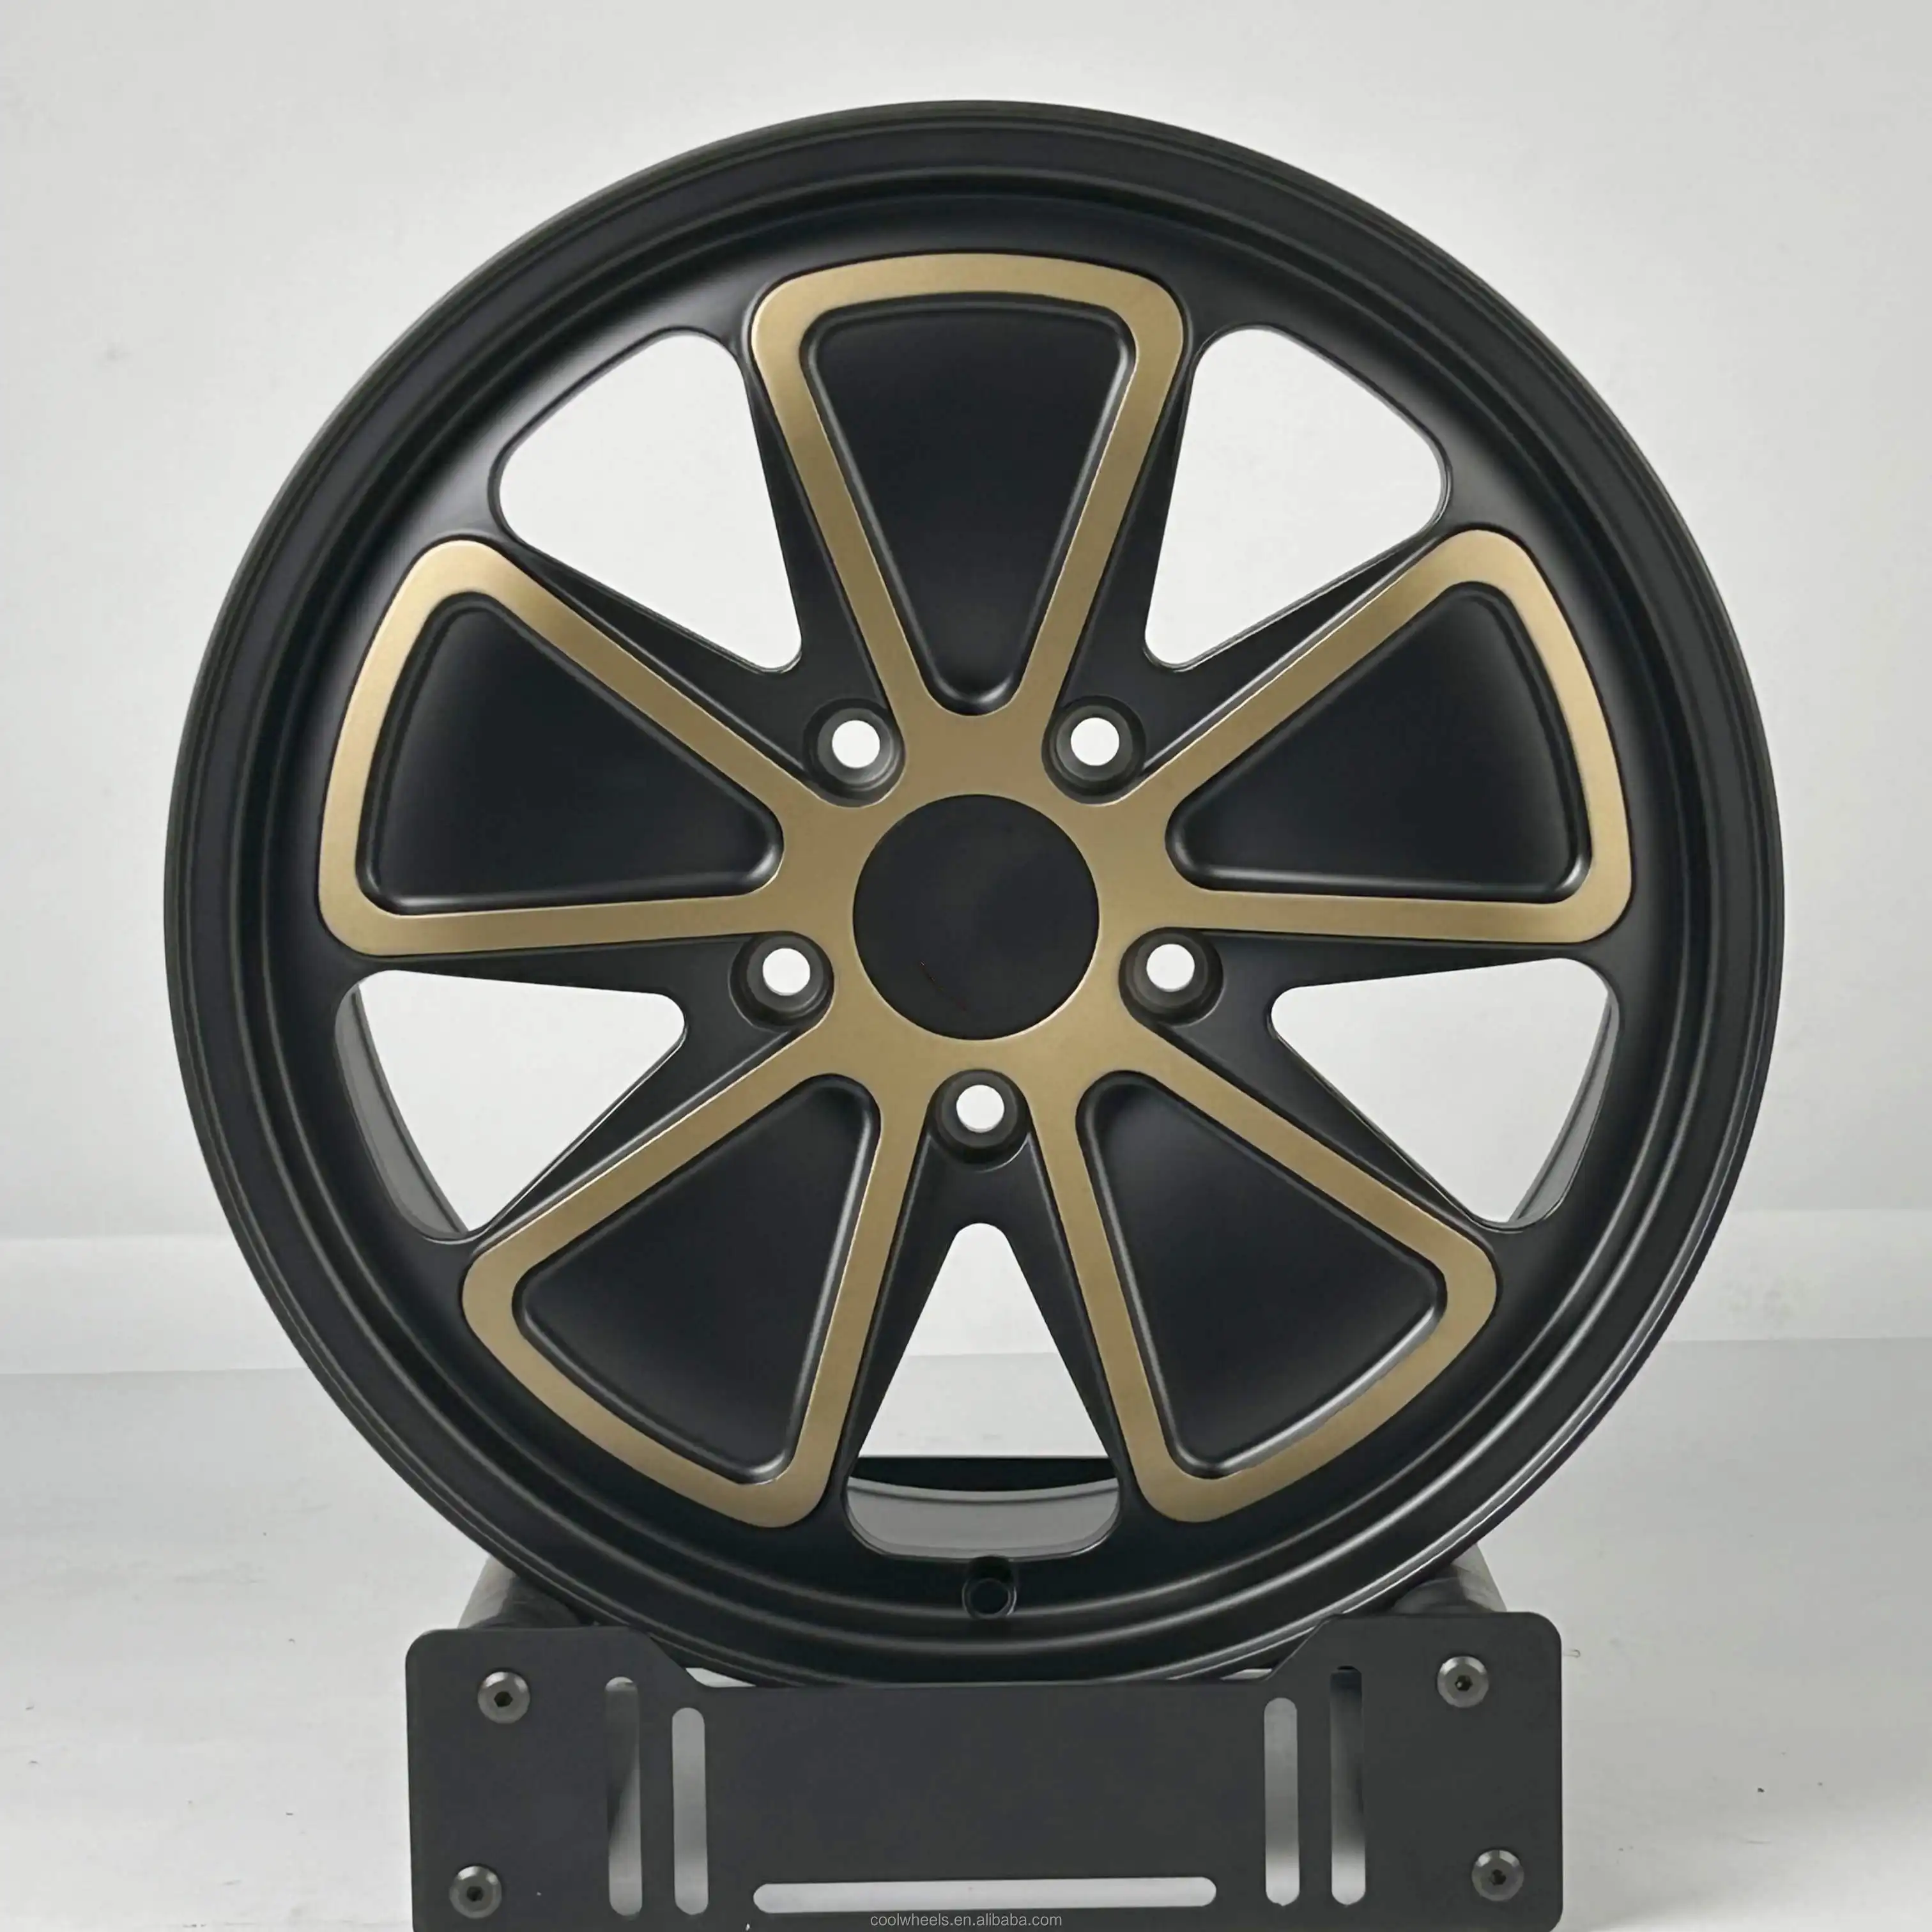 Bku 5x130 wheels 17 18 19 20 21 inch rims sport forged alloy racing car wheels disc for Porsche 964 turbo 960 911 991 992 944